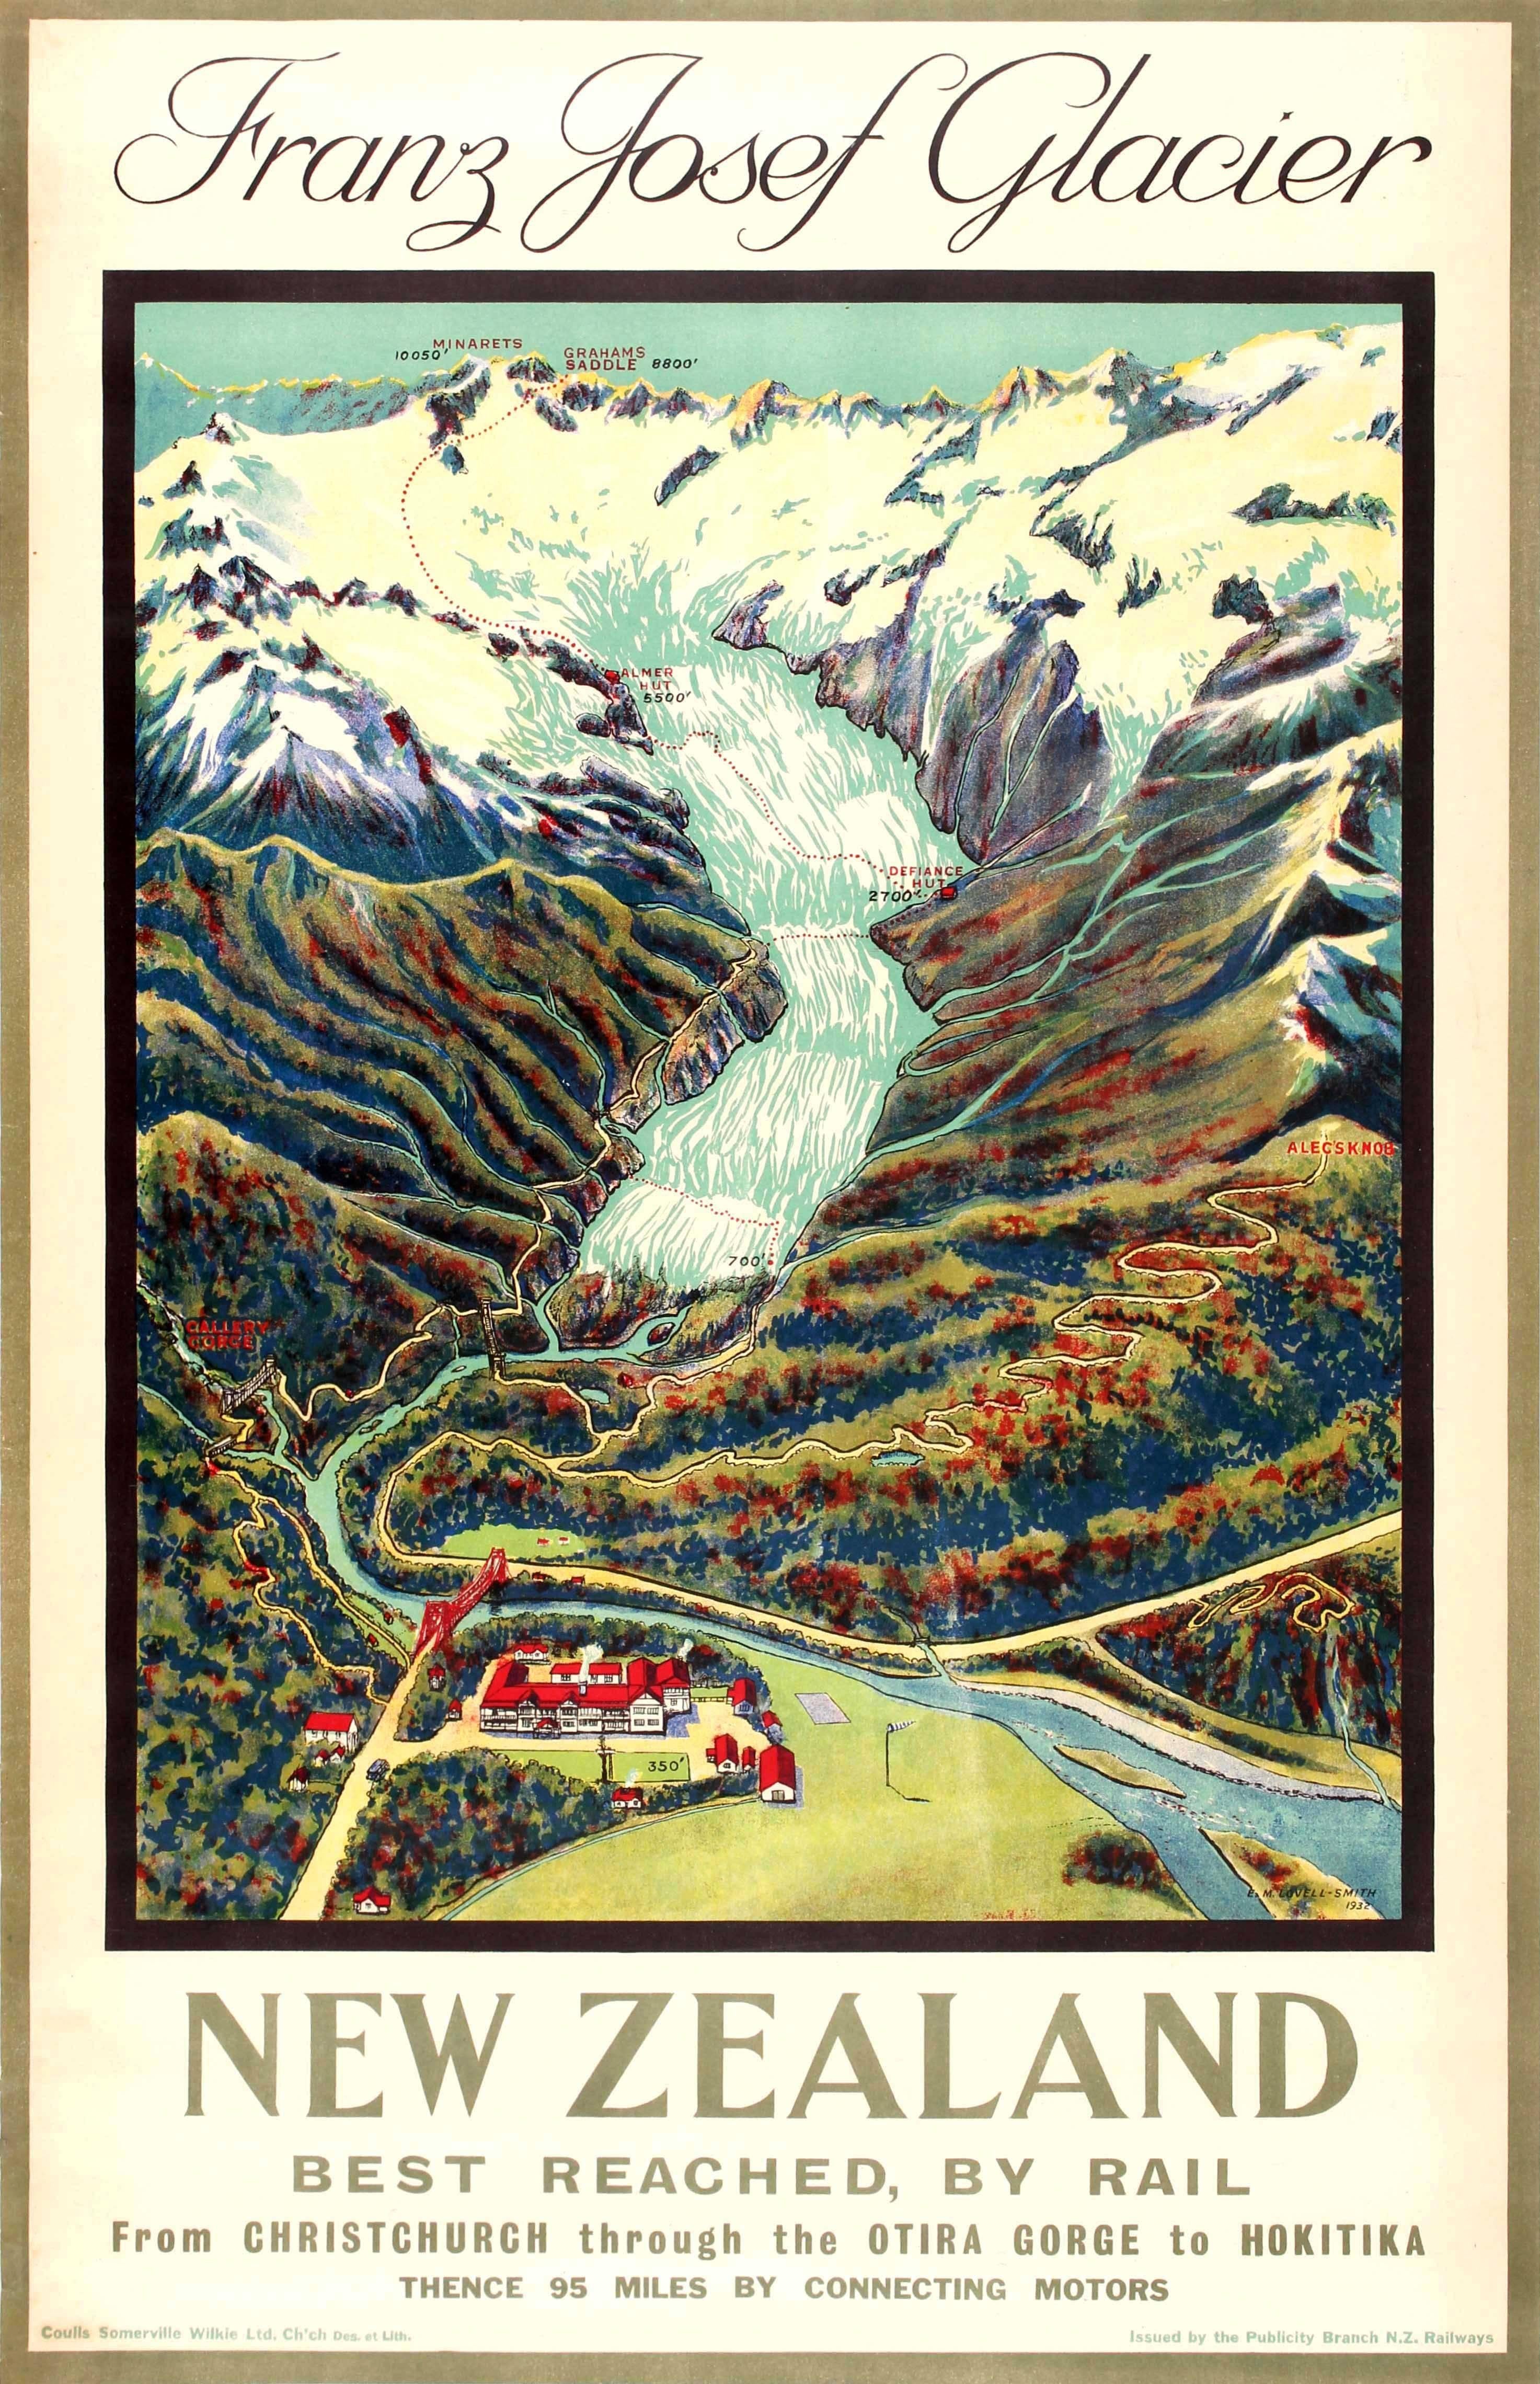 Edgar McLeod Lovell Smith Print - Original Vintage Rail Travel Advertising Poster Franz Josef Glacier New Zealand